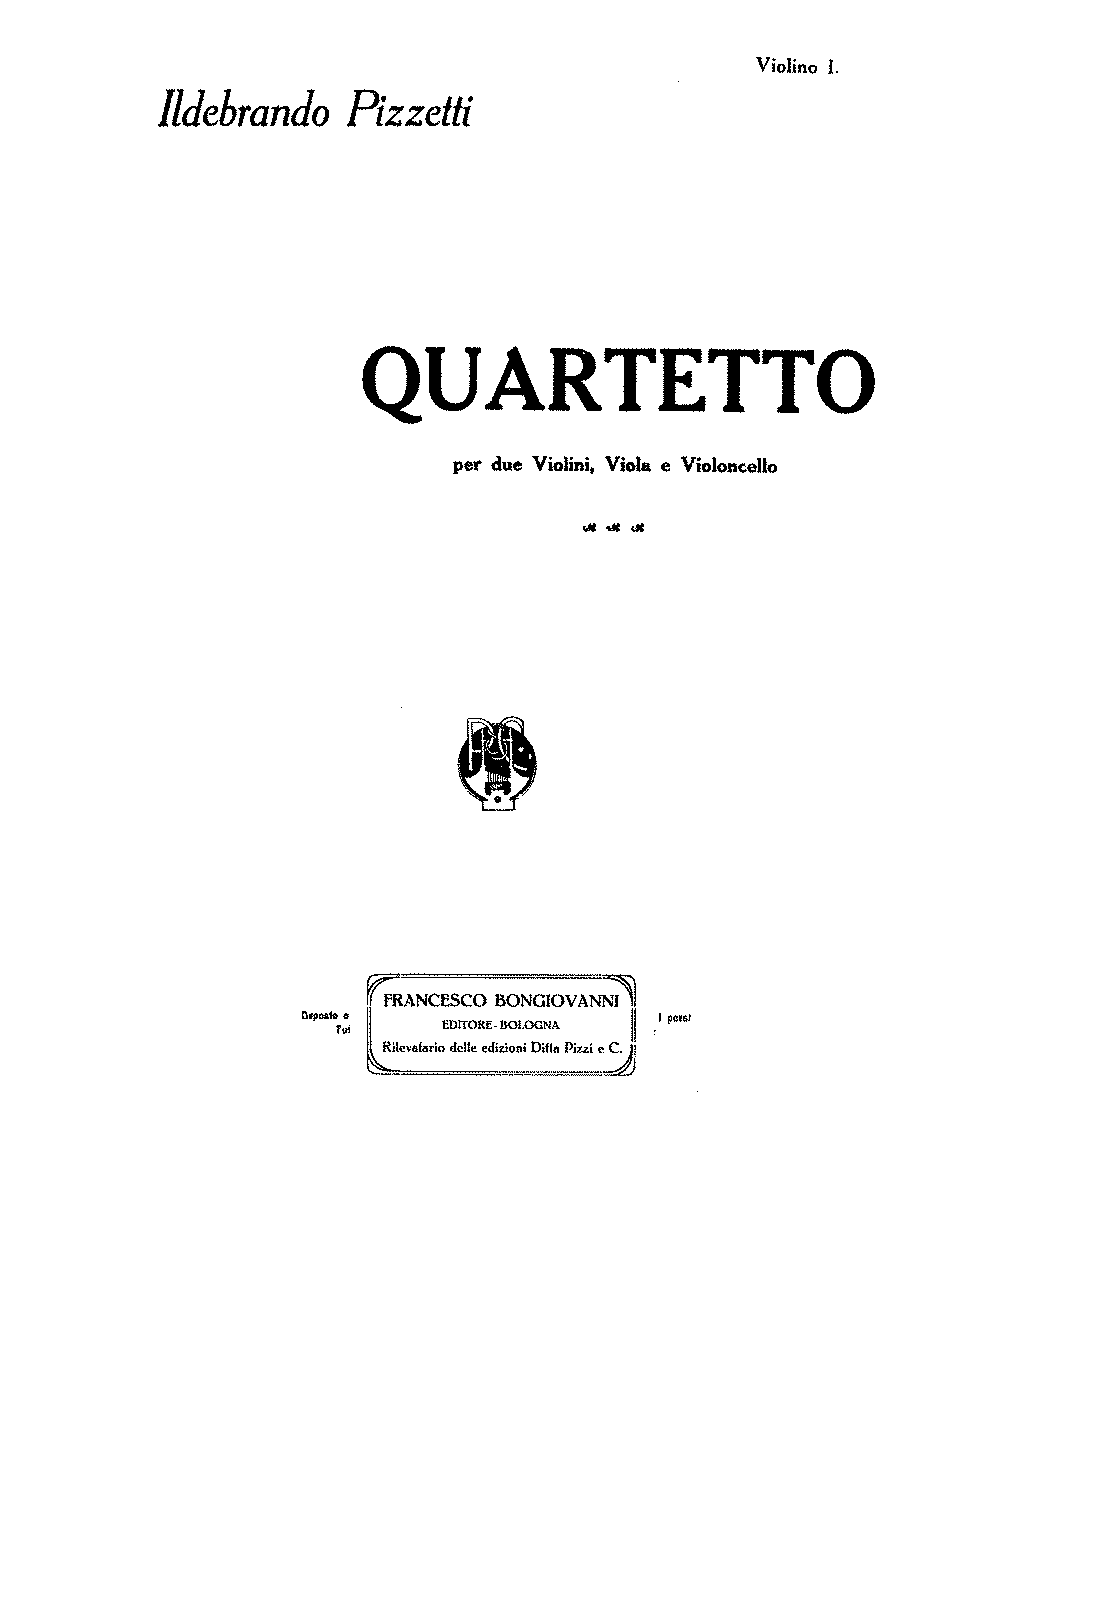 String Quartet No.1 in A major (Pizzetti, Ildebrando) - IMSLP